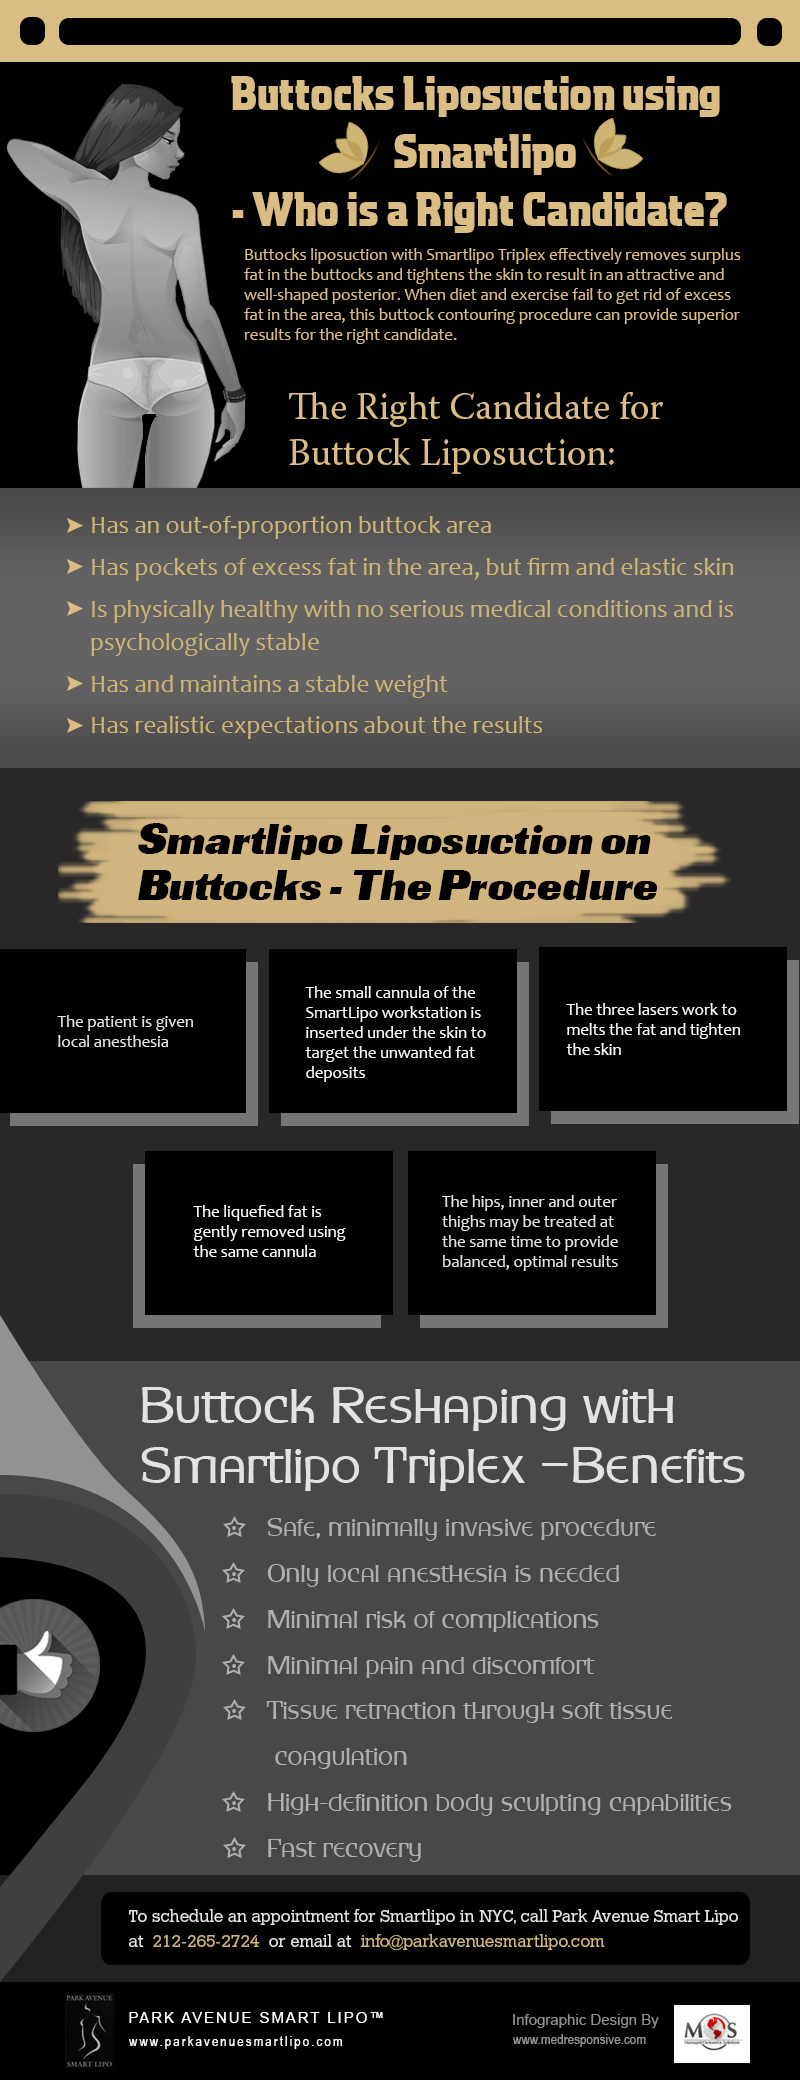 Buttocks Liposuction using Smartlipo